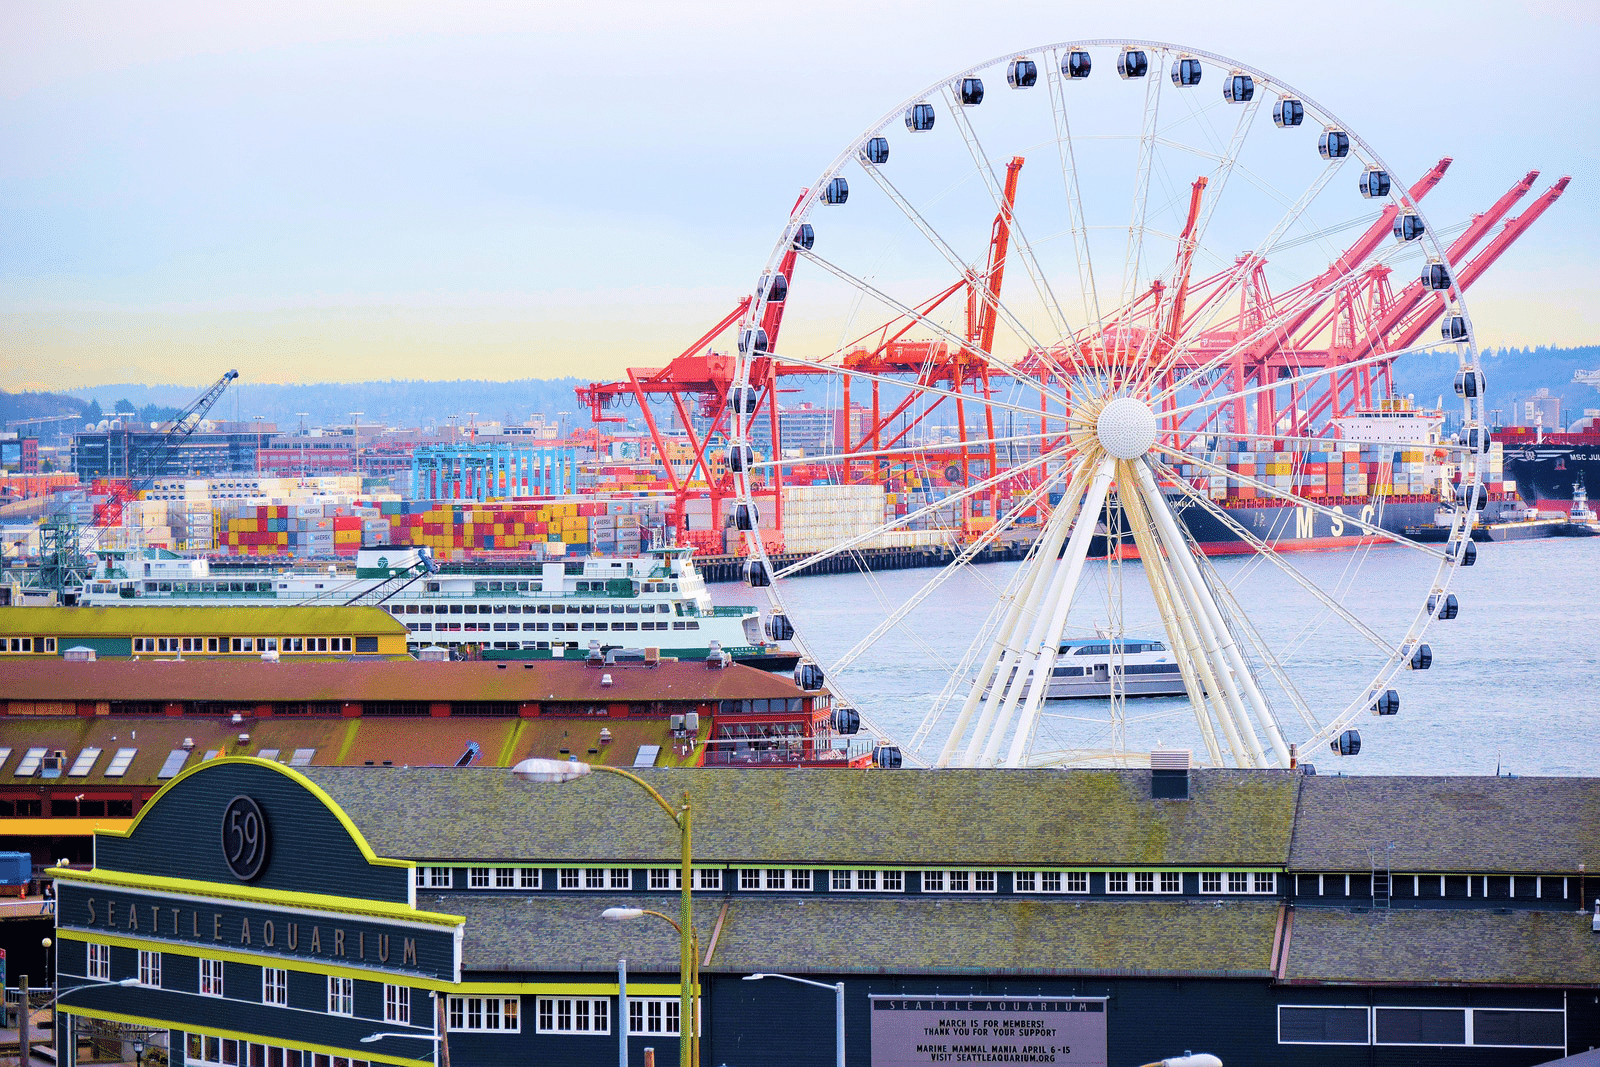 Seattle Great Wheel, Booking Express Travel